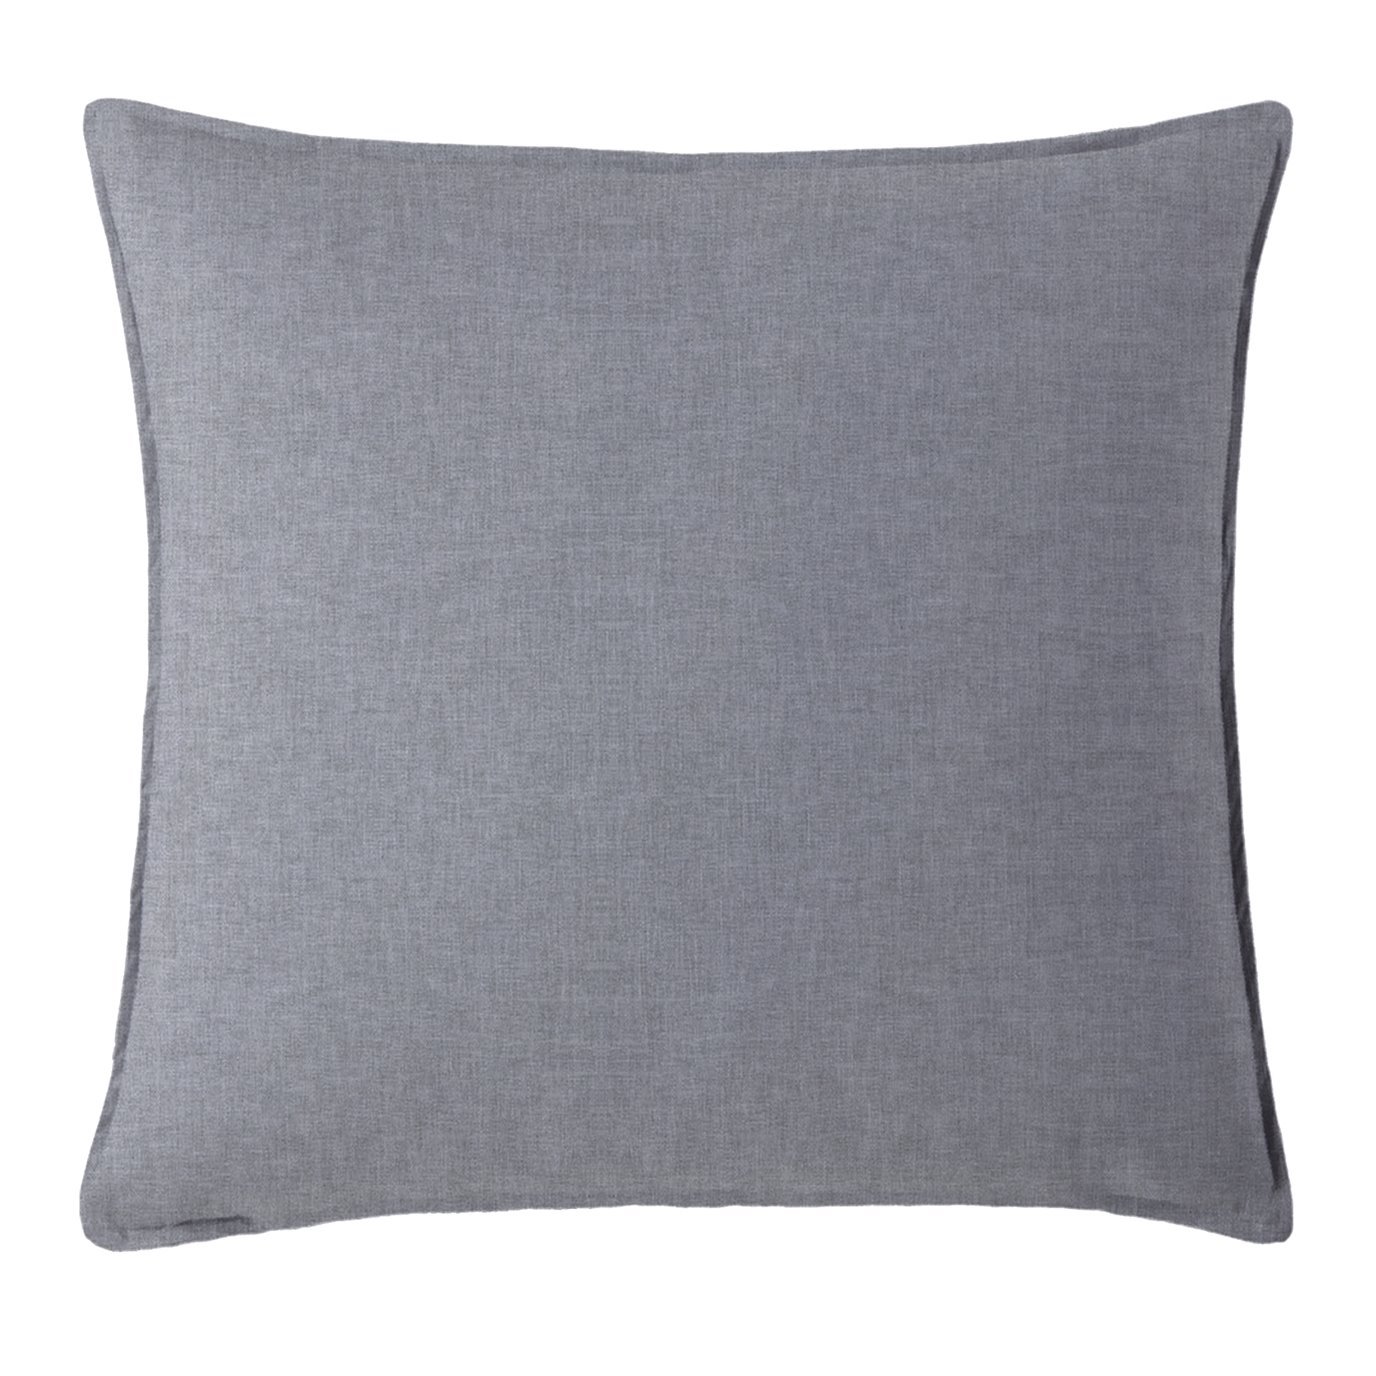 Rodney Square Pillow 20"x20"